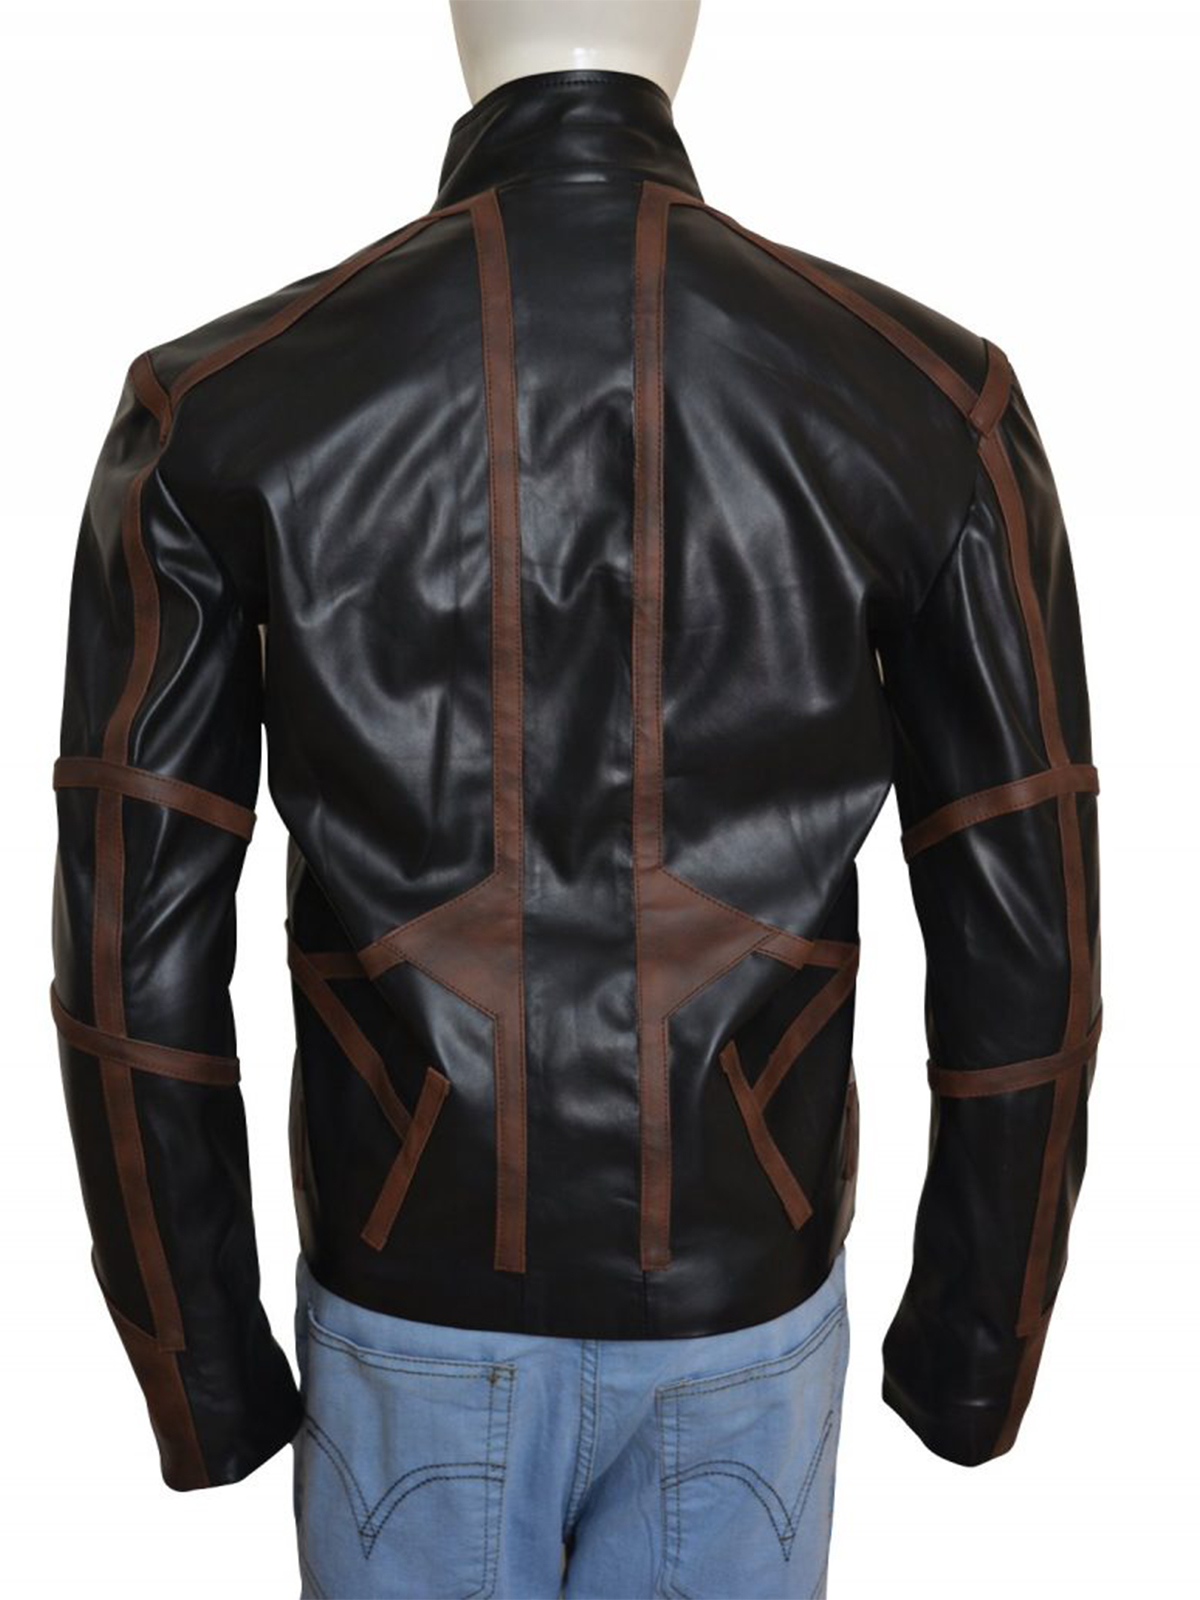 The Winter Soldier Bucky Barnes Black Jacket